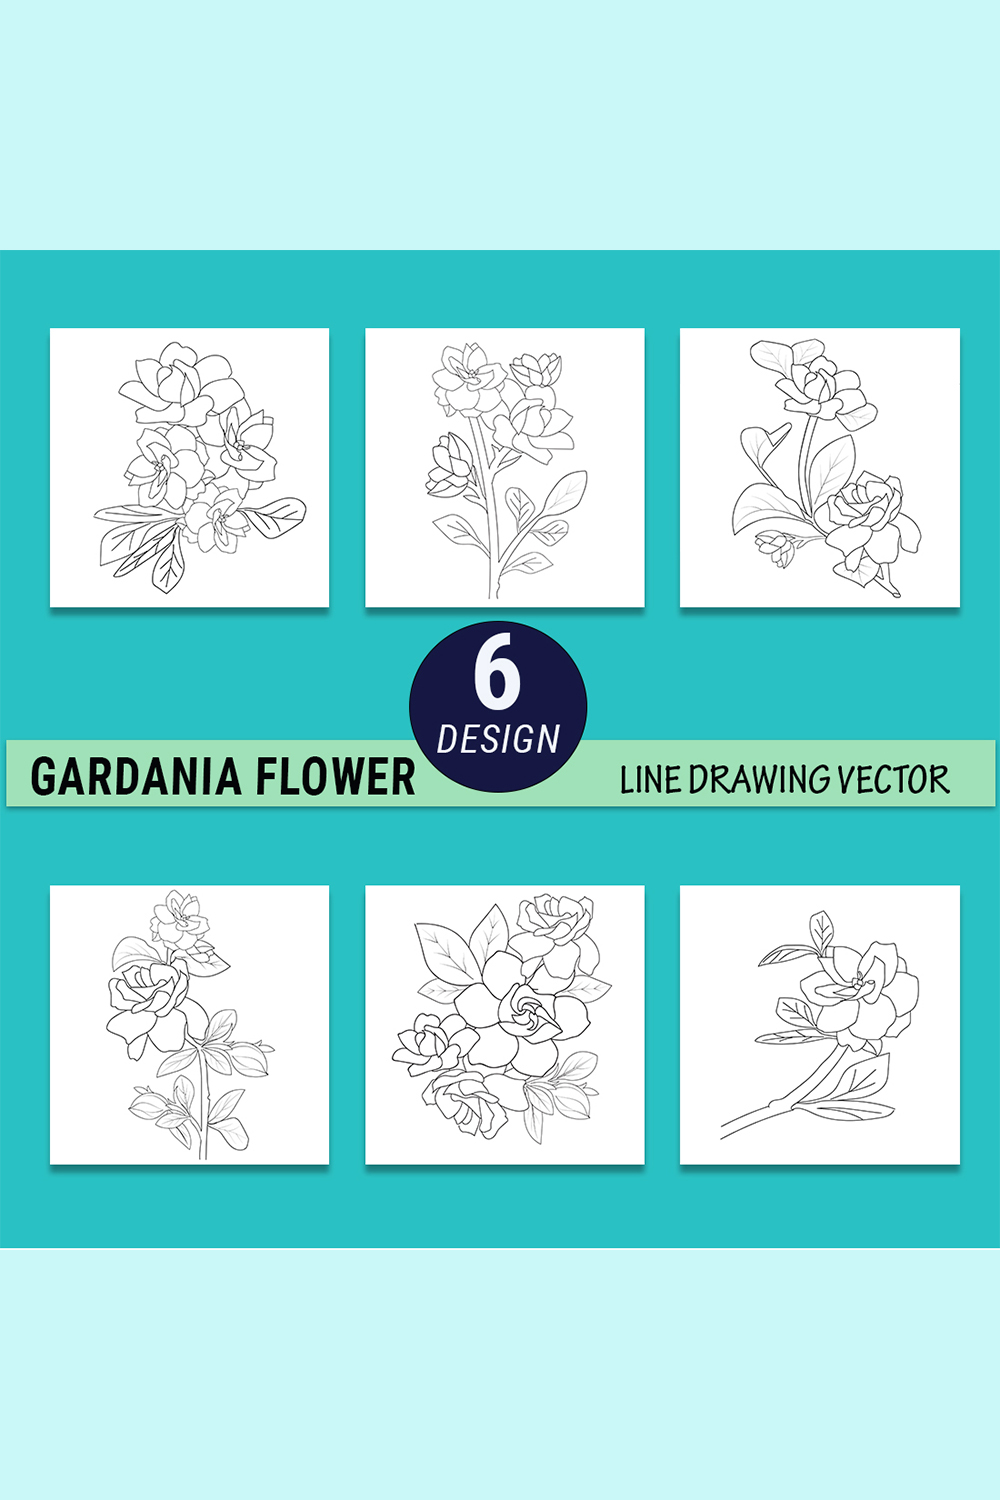 Gardenia flower drawing, gardenia magnolia coloring pages easy gardenia flower drawing, pencil gardenia flower drawing pinterest preview image.